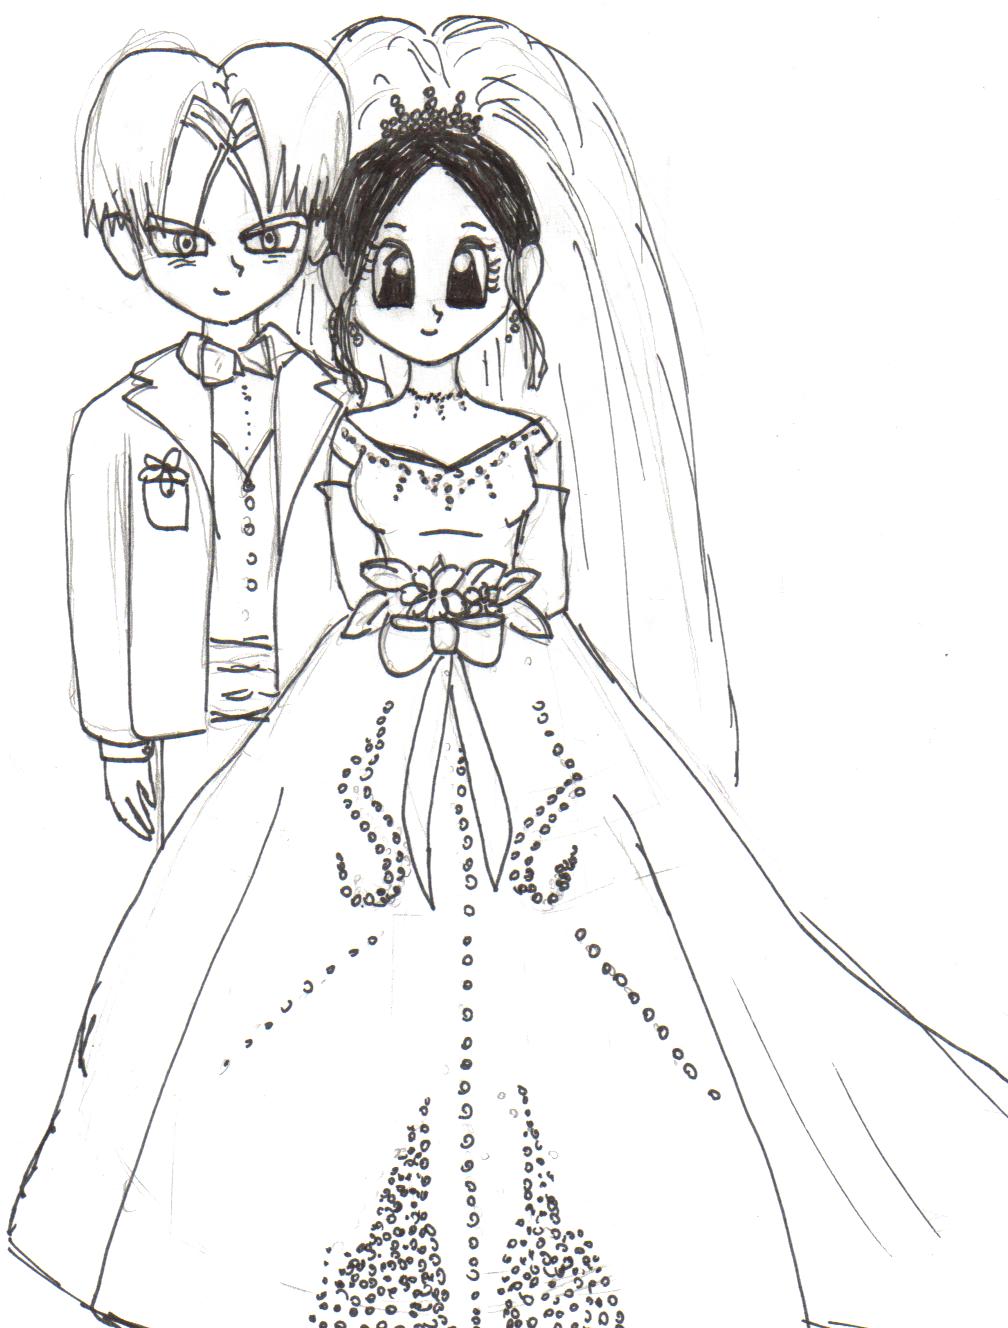 Trunks and Pan's wedding Portrait by ZeldaGirl9793